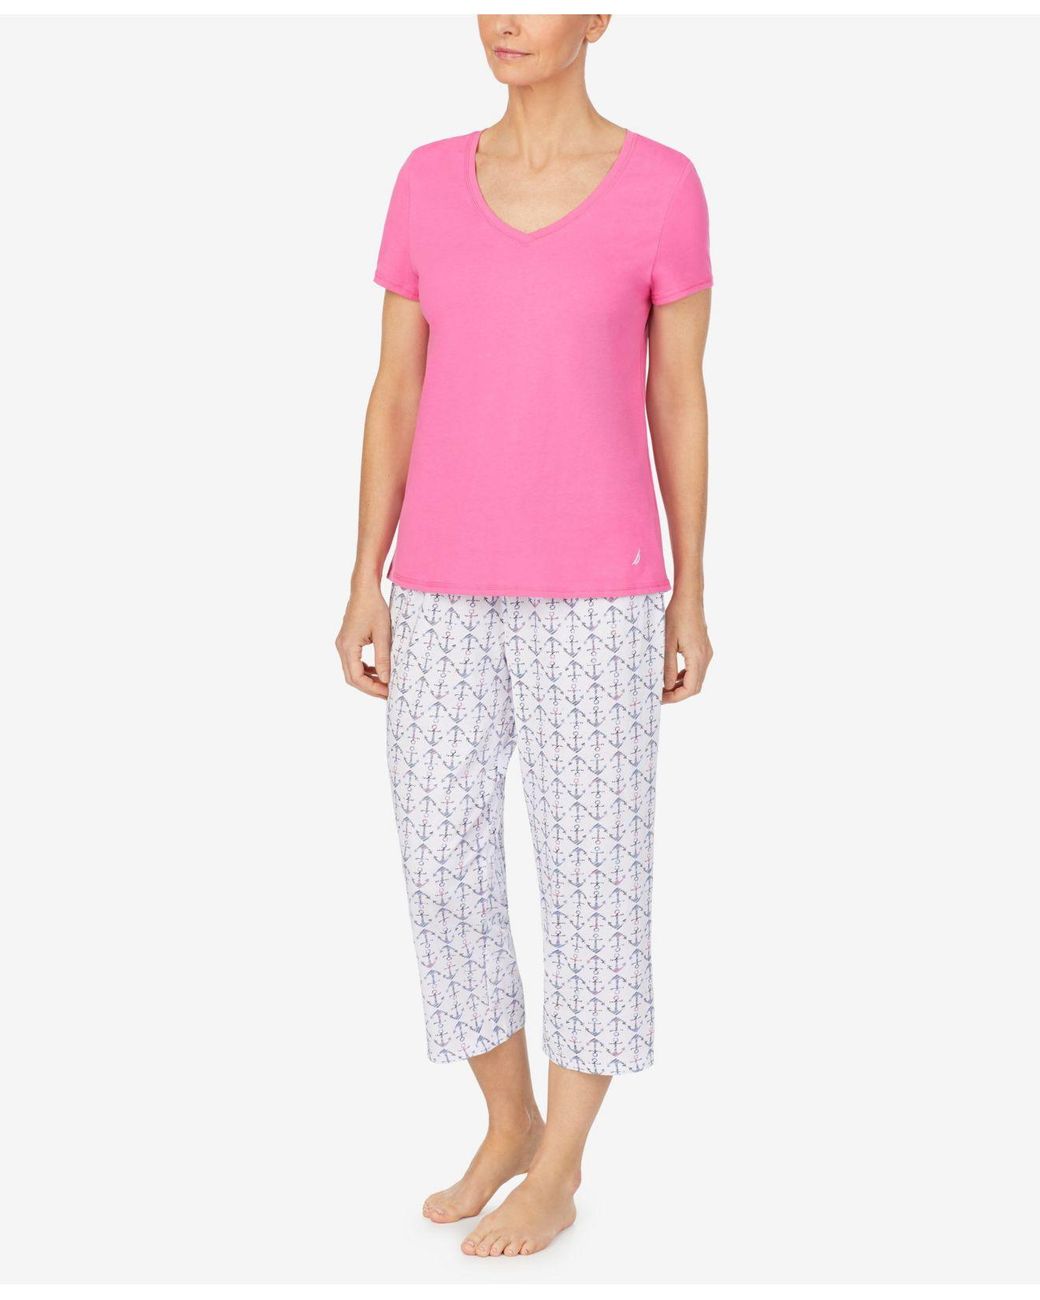 Nautica Cotton Capri Pajama Set in Navy Print (Pink) - Lyst